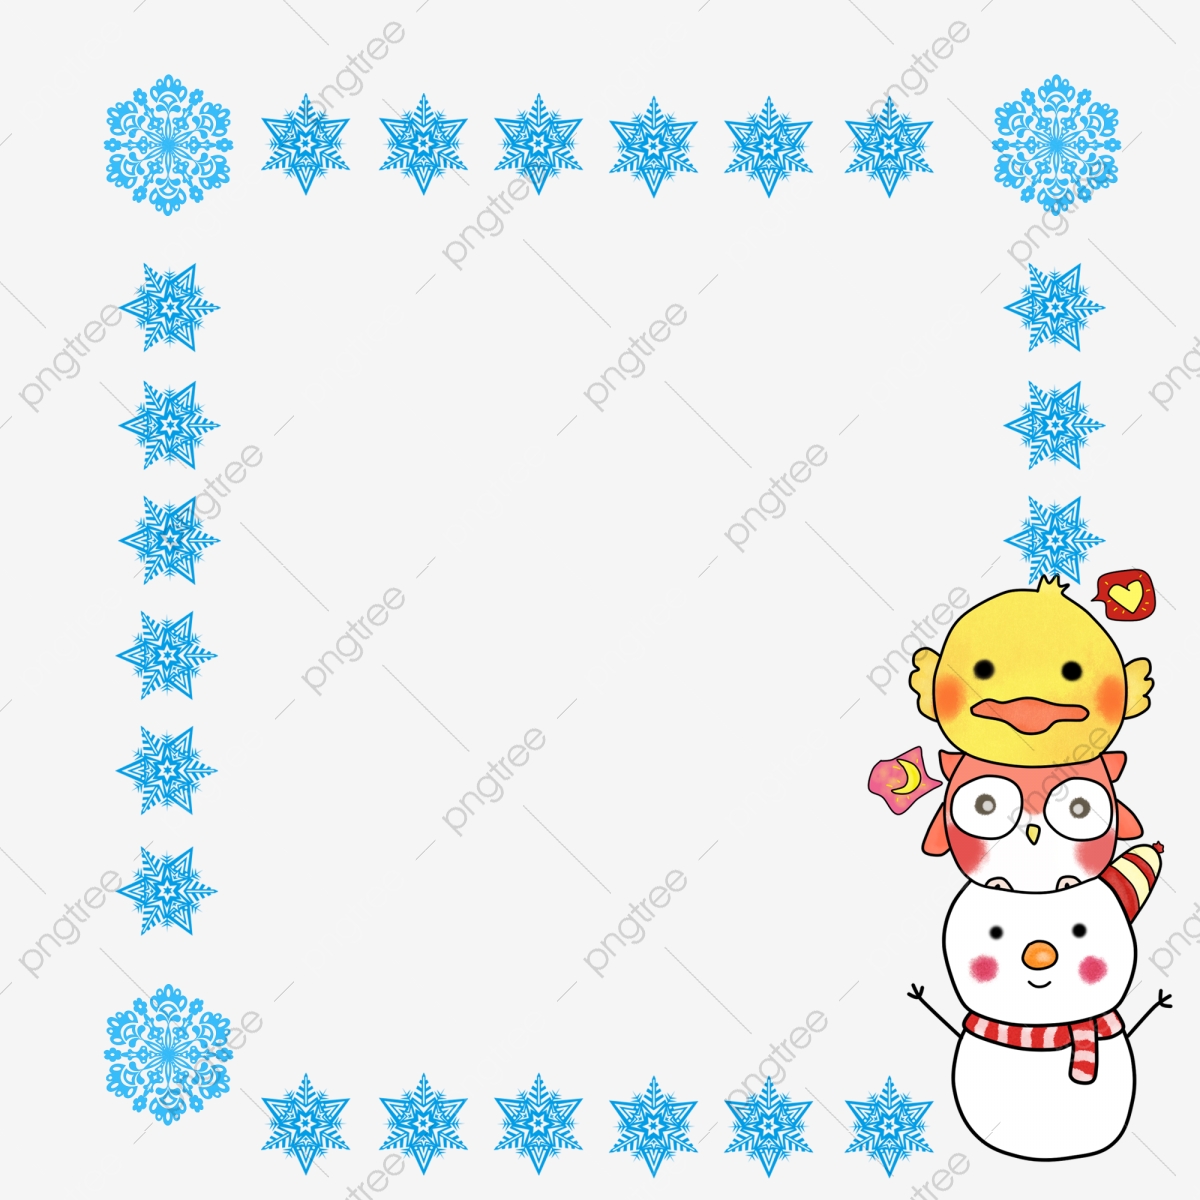 Christmas Frame Snowflake Border Snowman, Owl, Duck, Stacking Height.